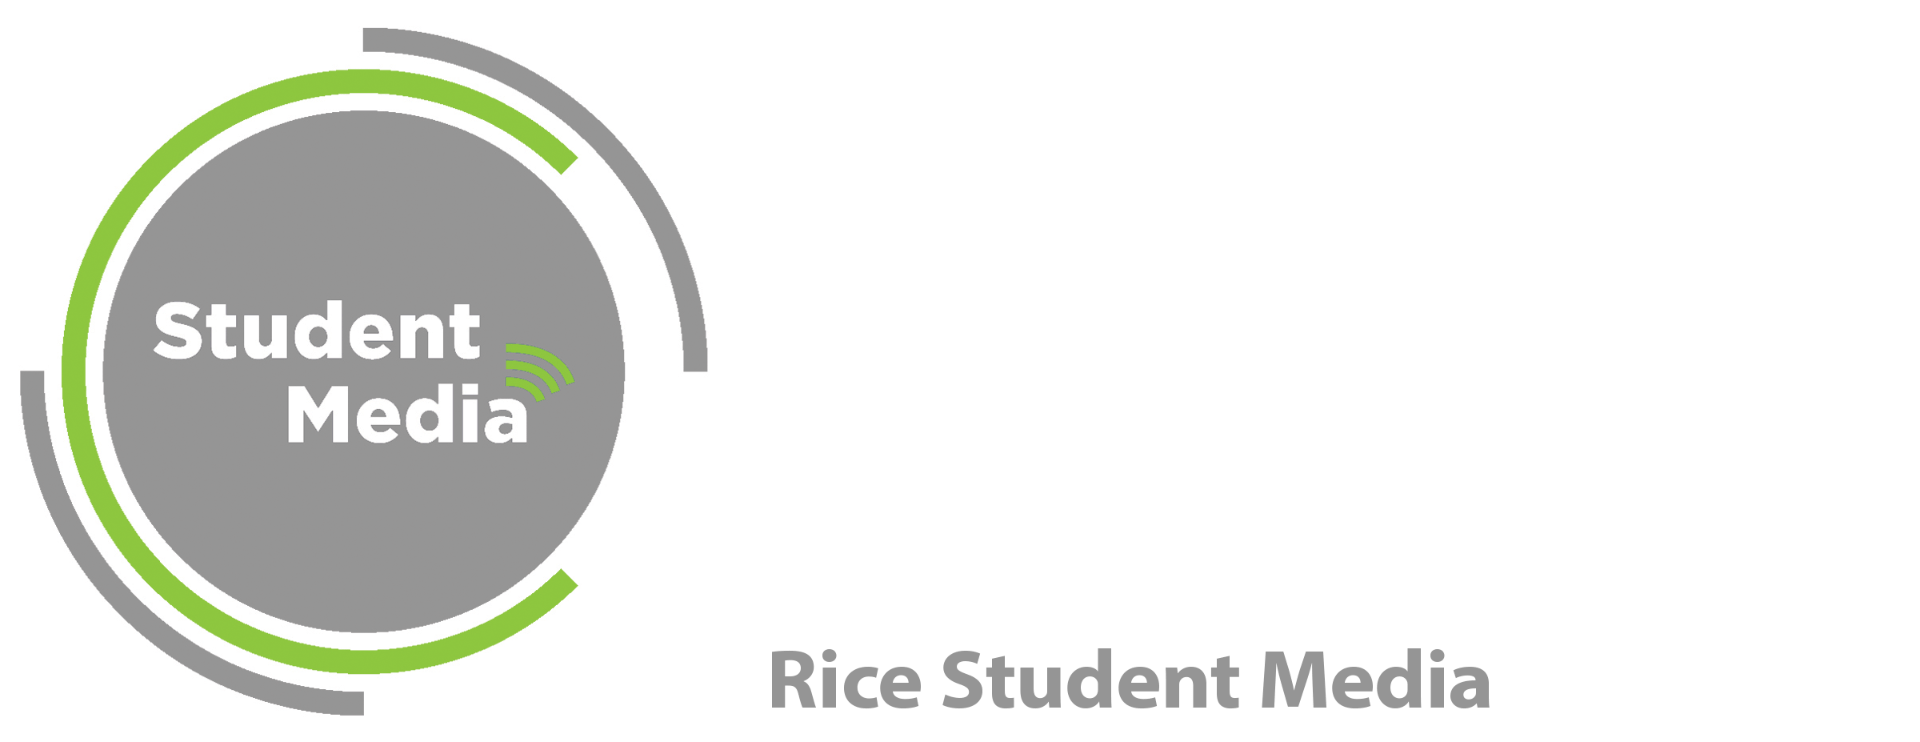 Rice Student Media